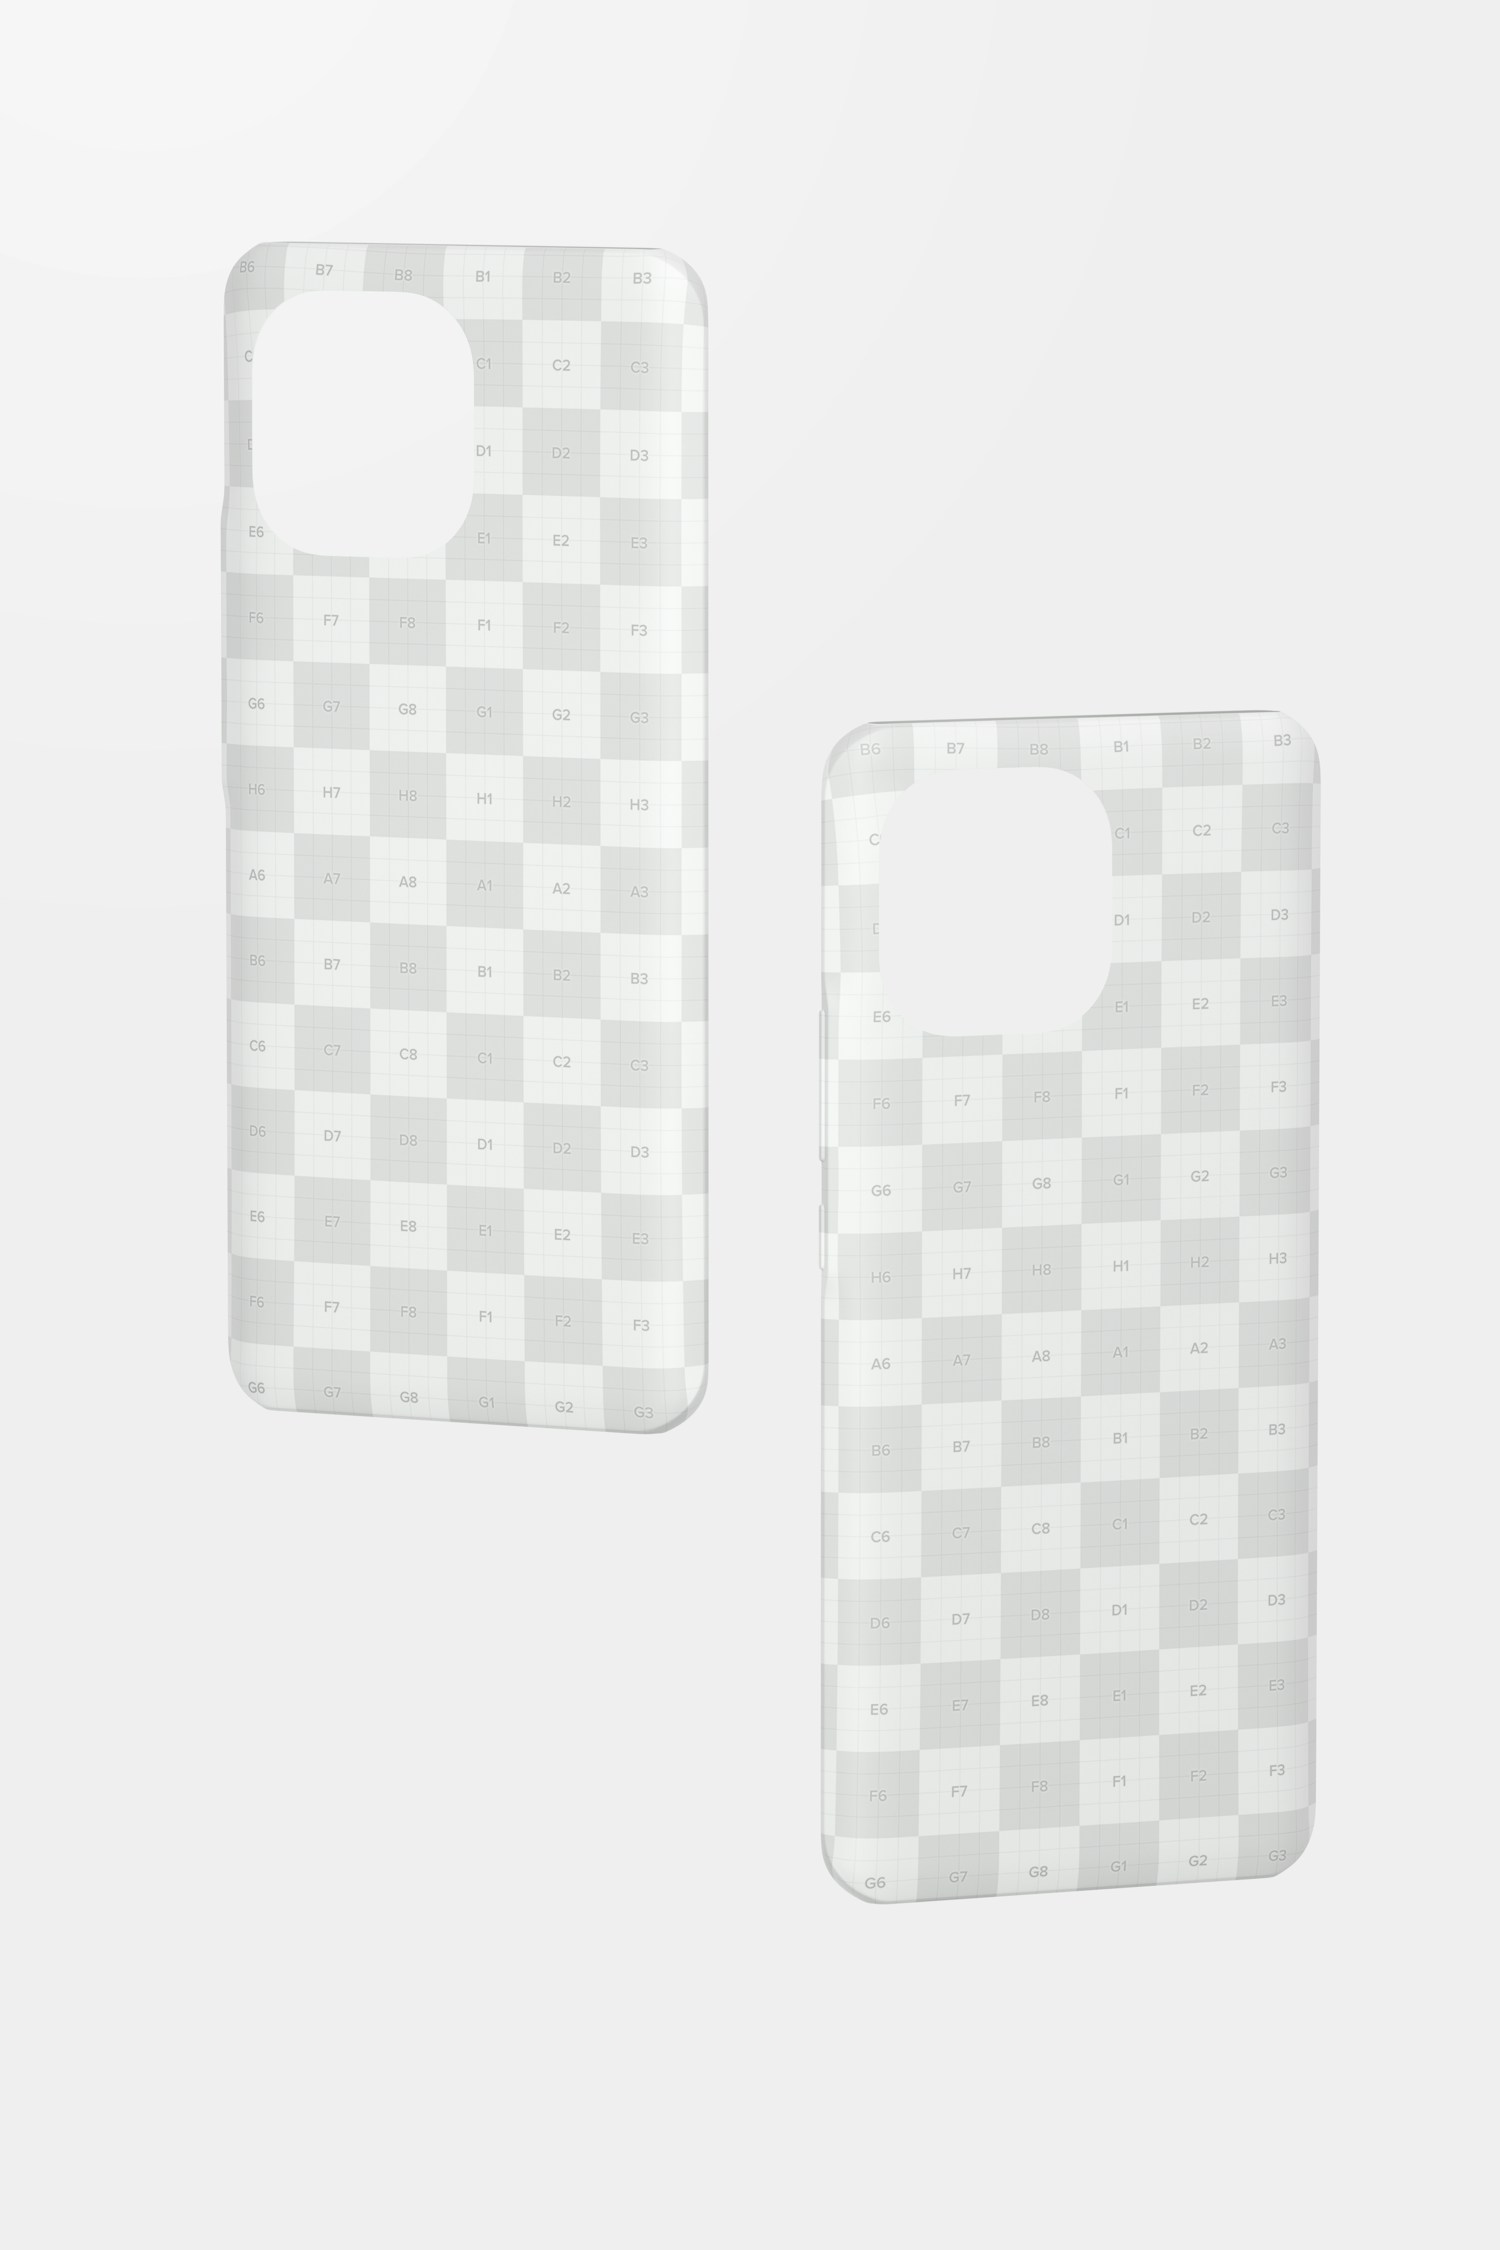 Xiaomi Case Mockup, Floating